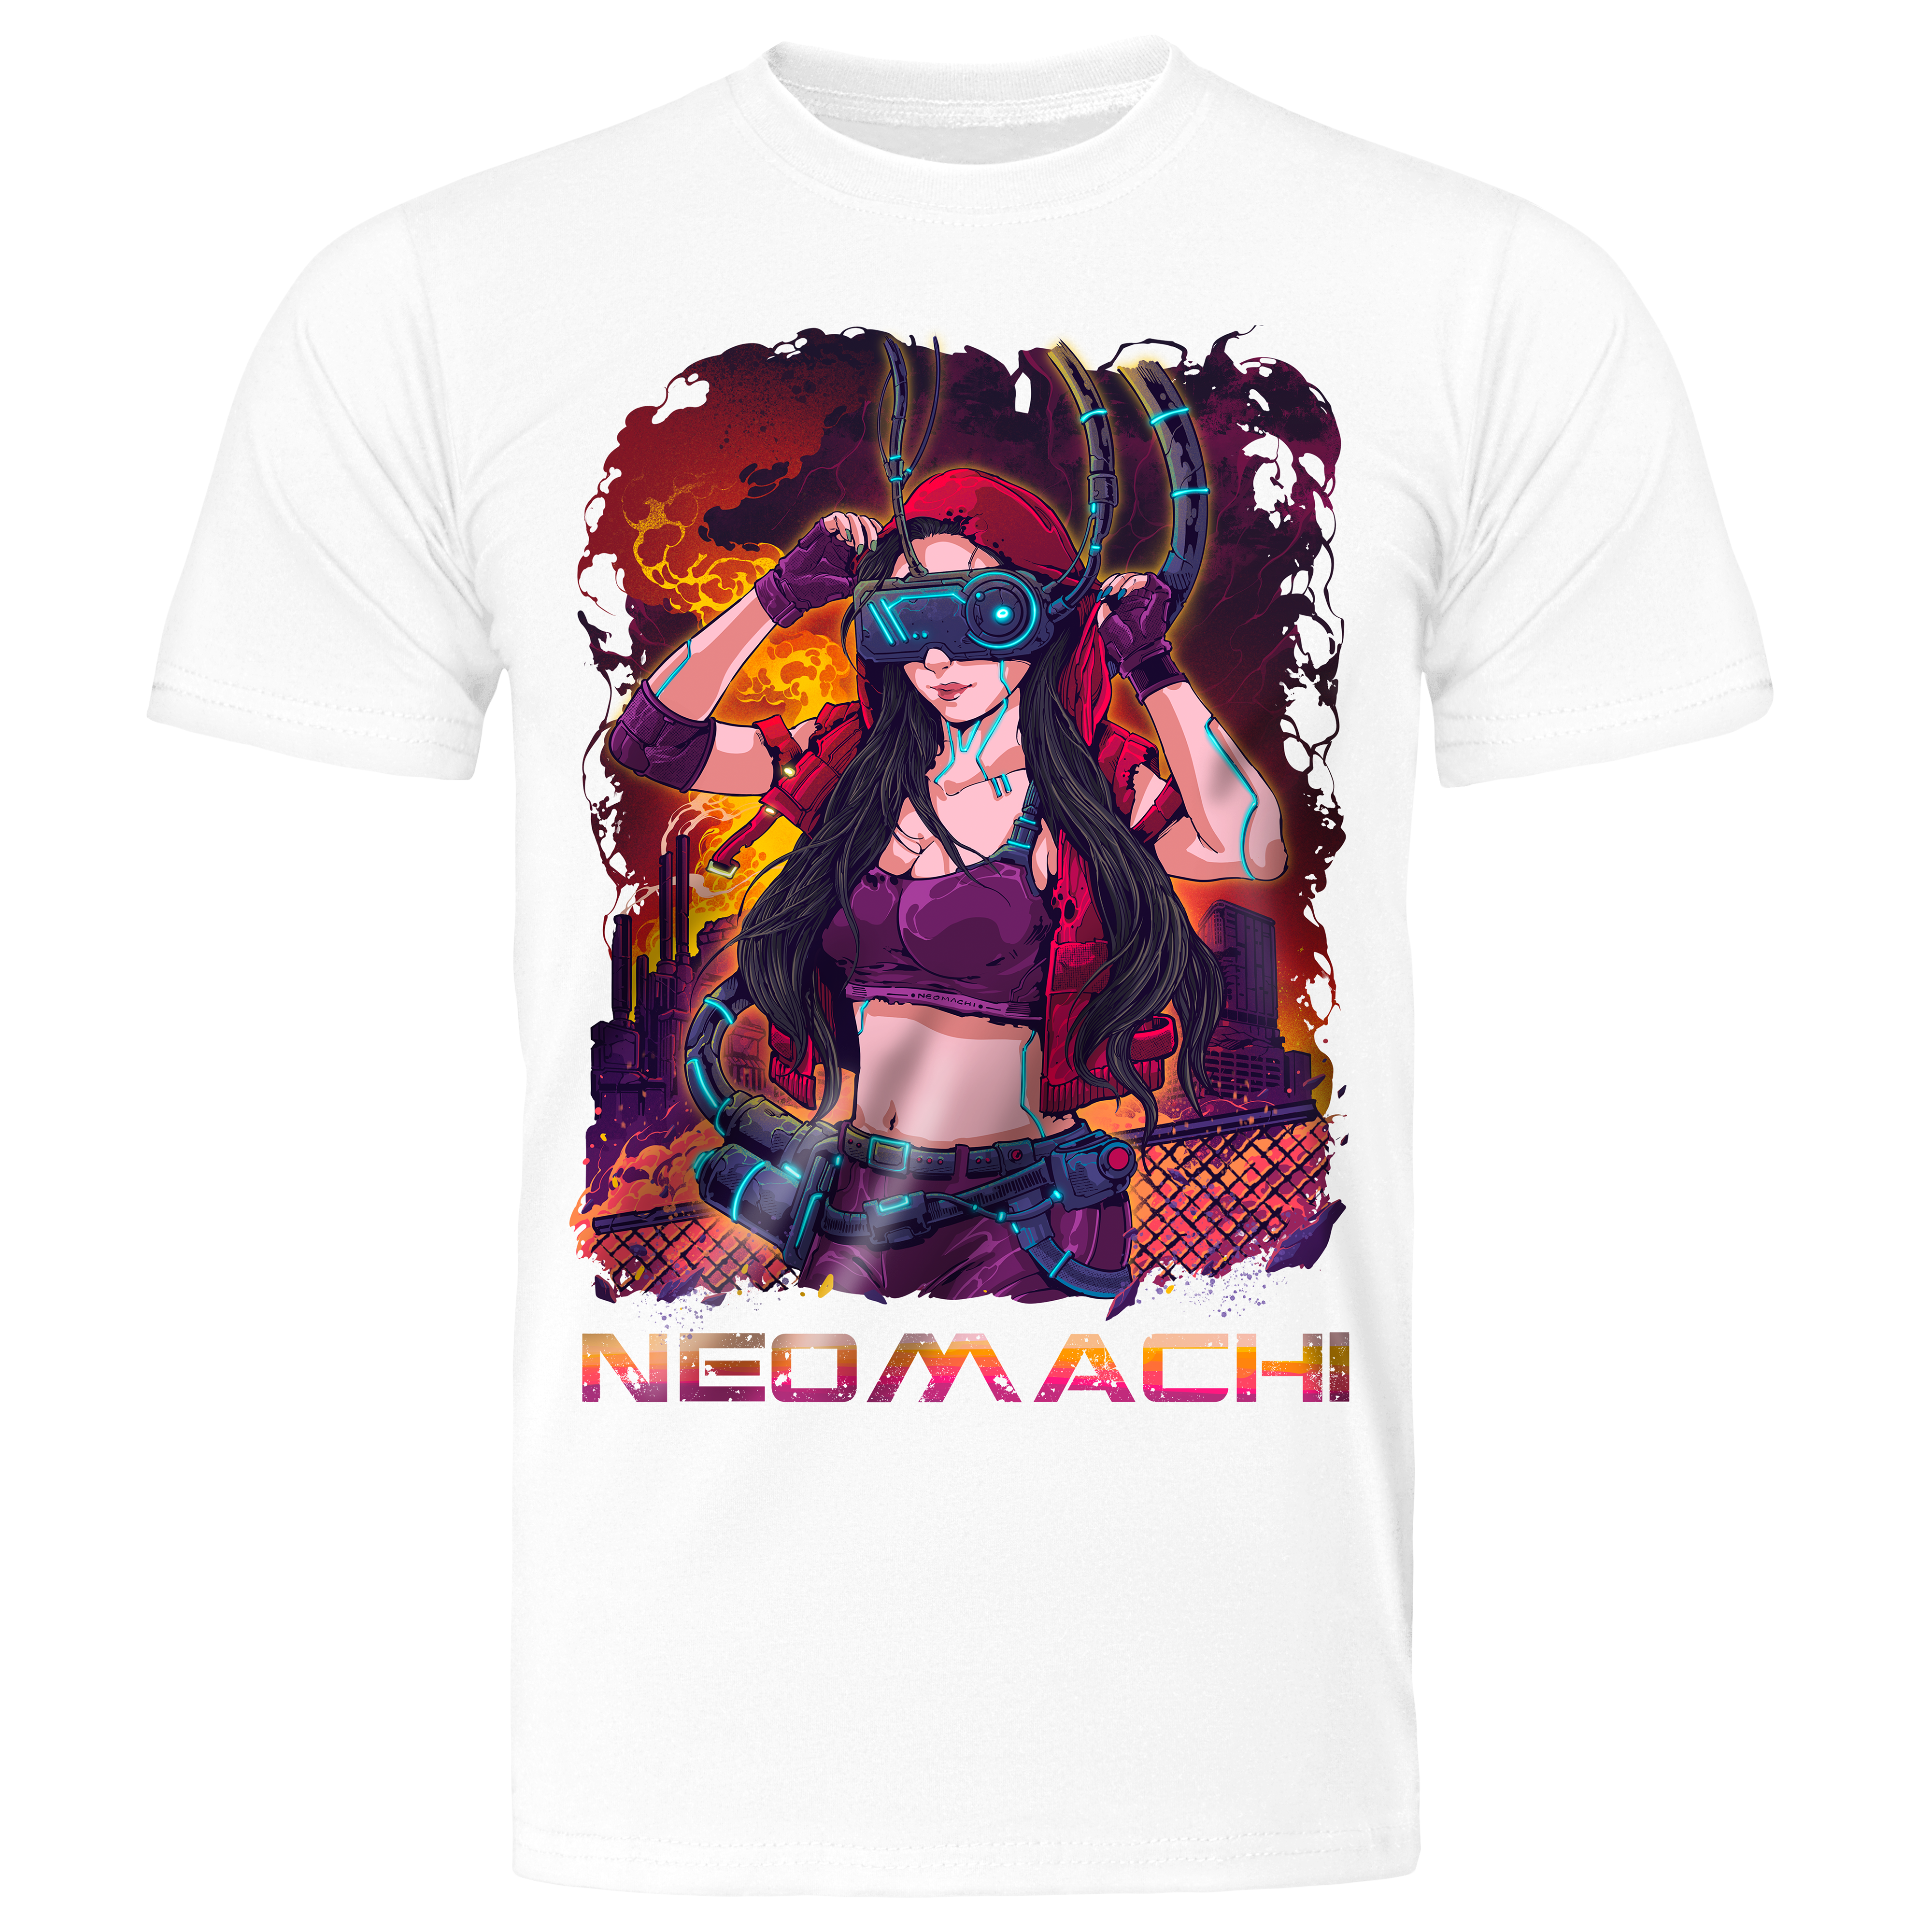 Nonfikushon: T-shirt - White - Front - cyberpunk t-shirt - Neomachi